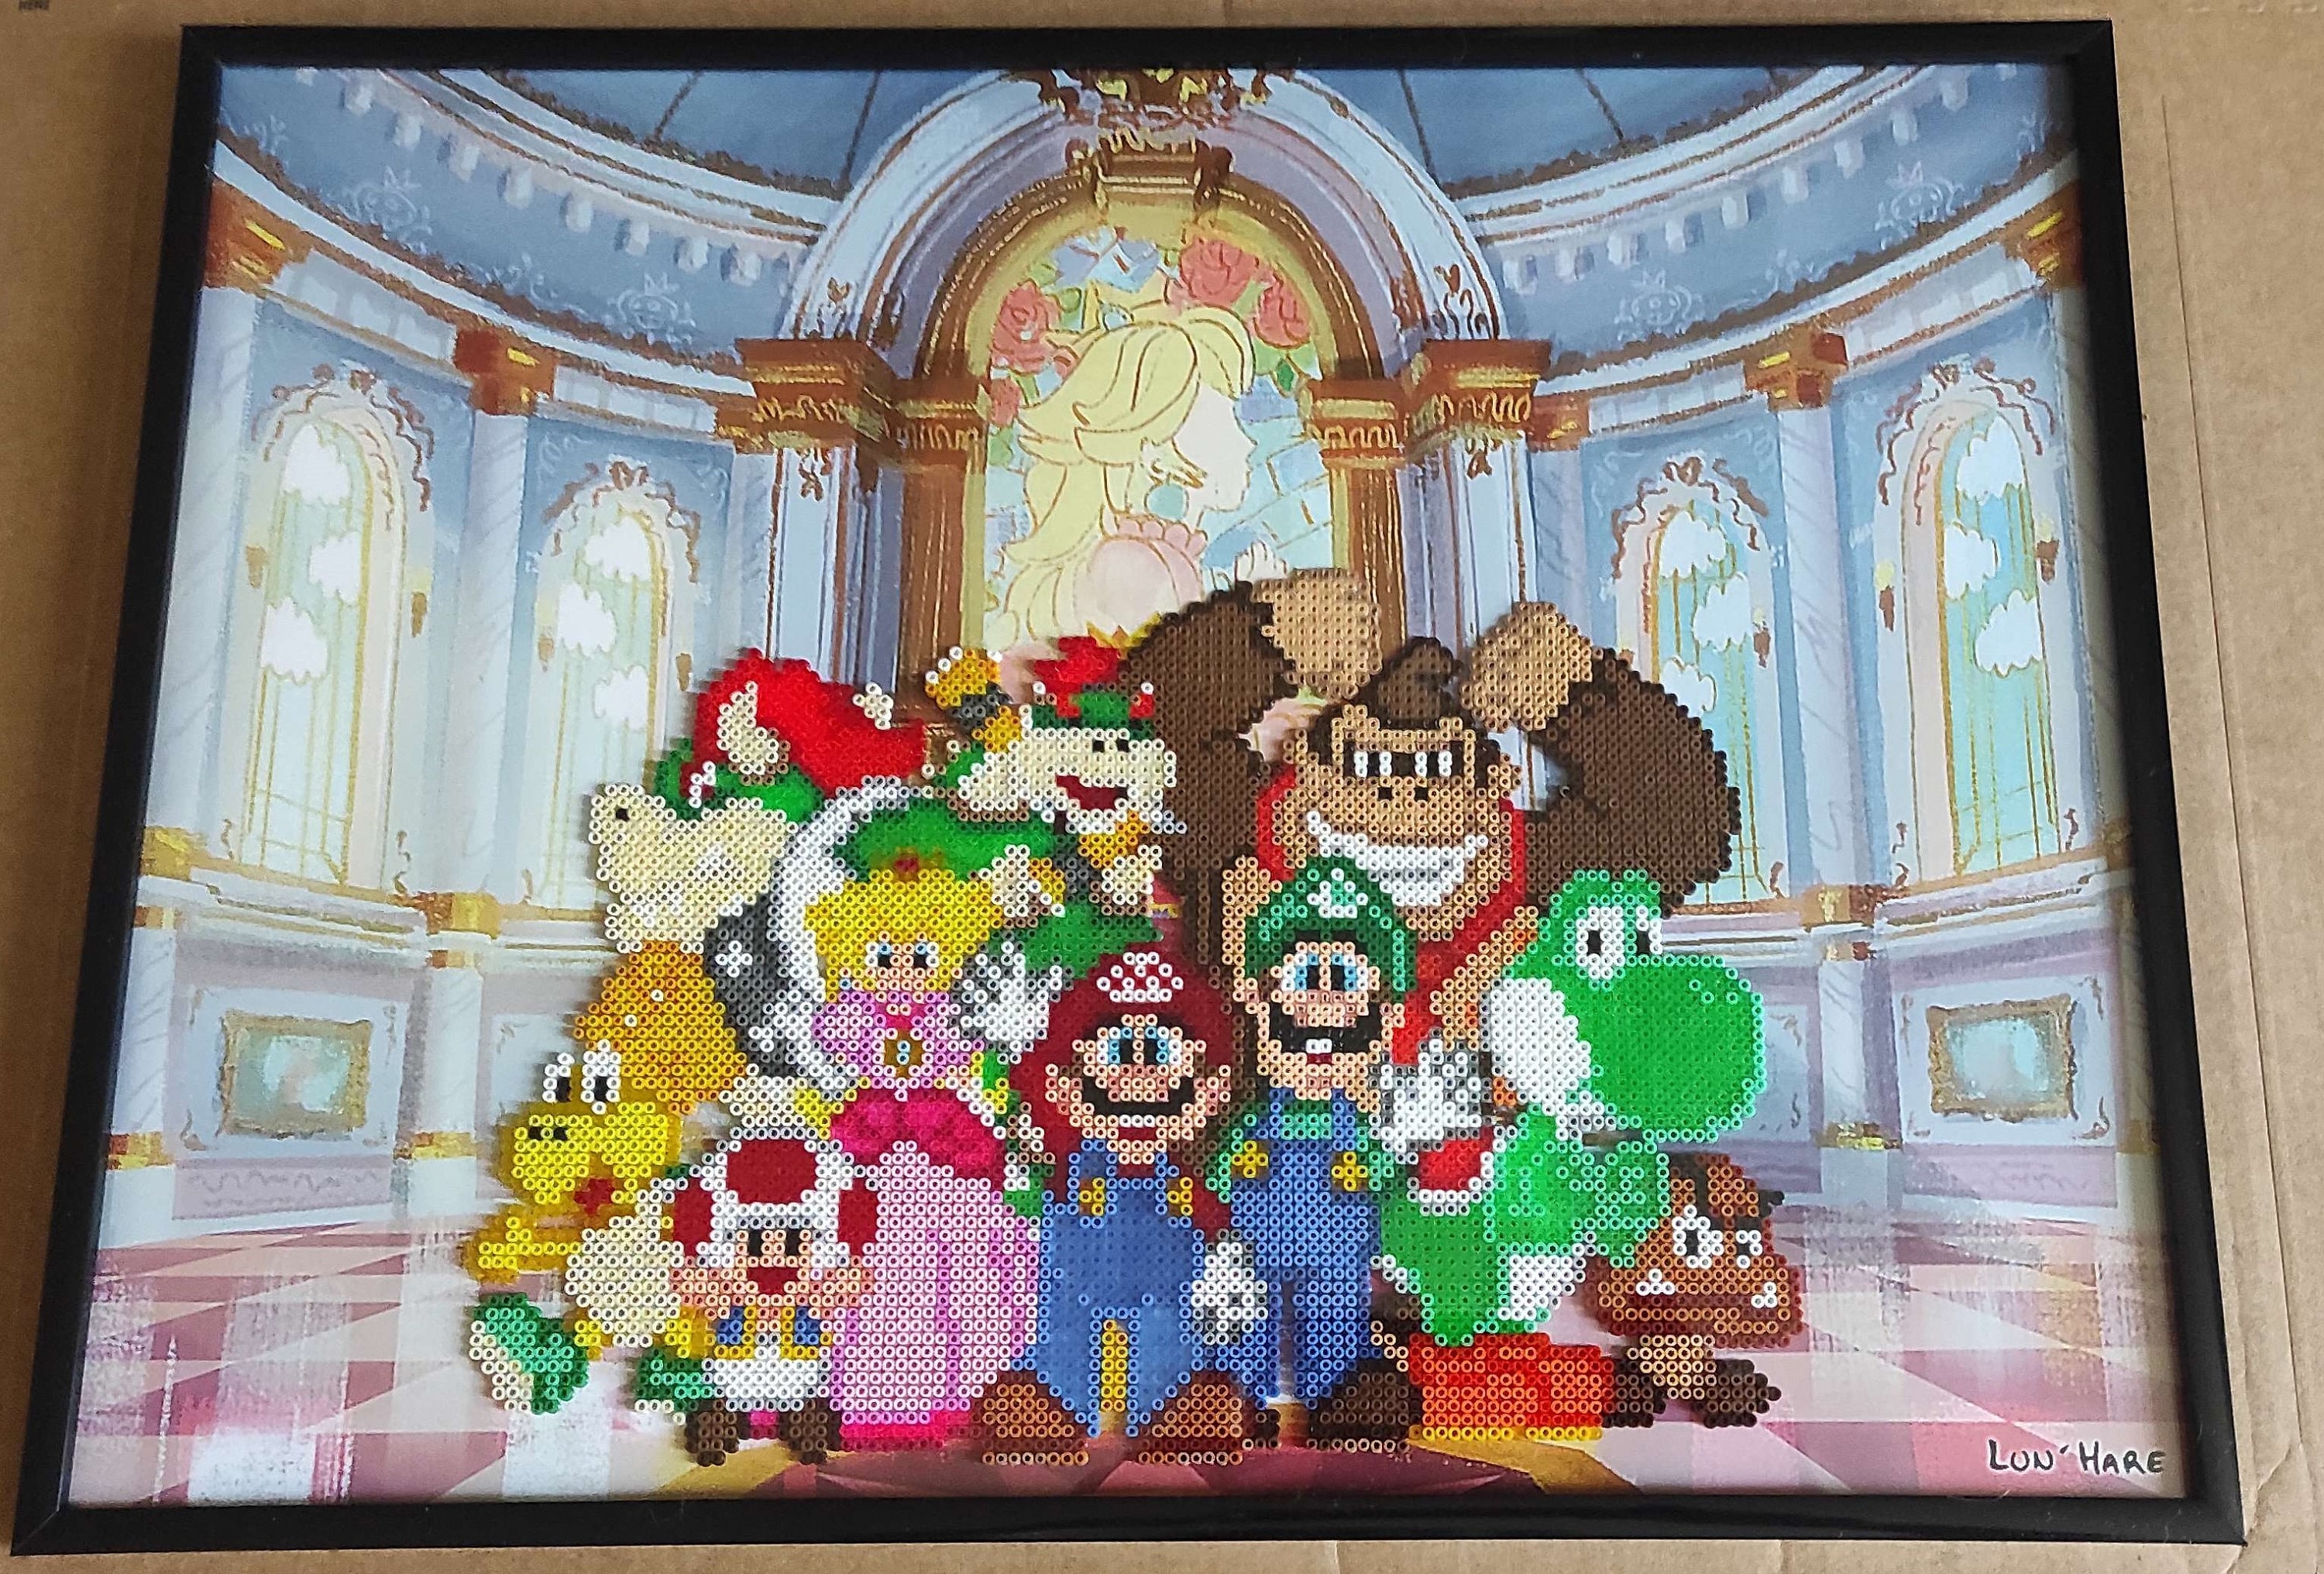 Super Mario Art Prints Toad Super Mario Prints Wall Art Game Room Decor Birthday Painting Set of 4 Pieces (8”X10”Canvas Picture), Bathroom Room